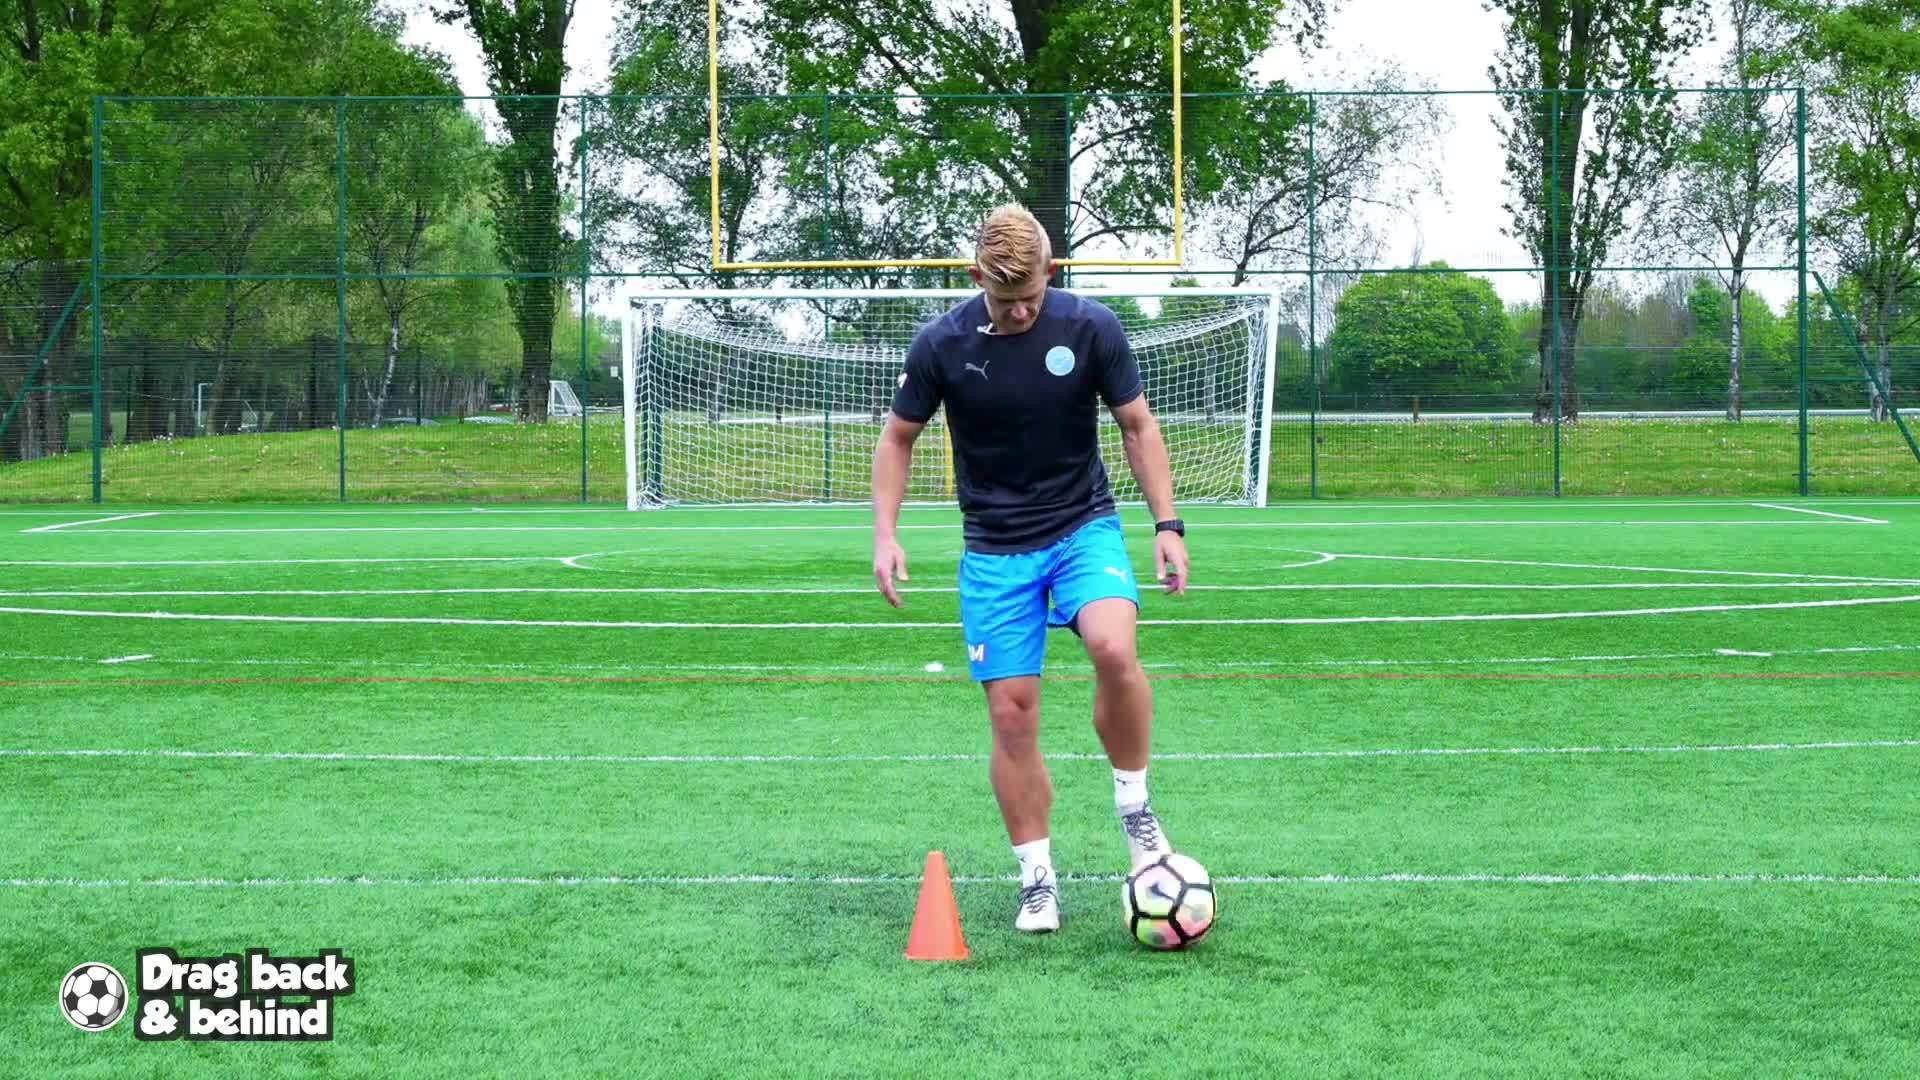 Kicking - (Soccer) Drag back & behind